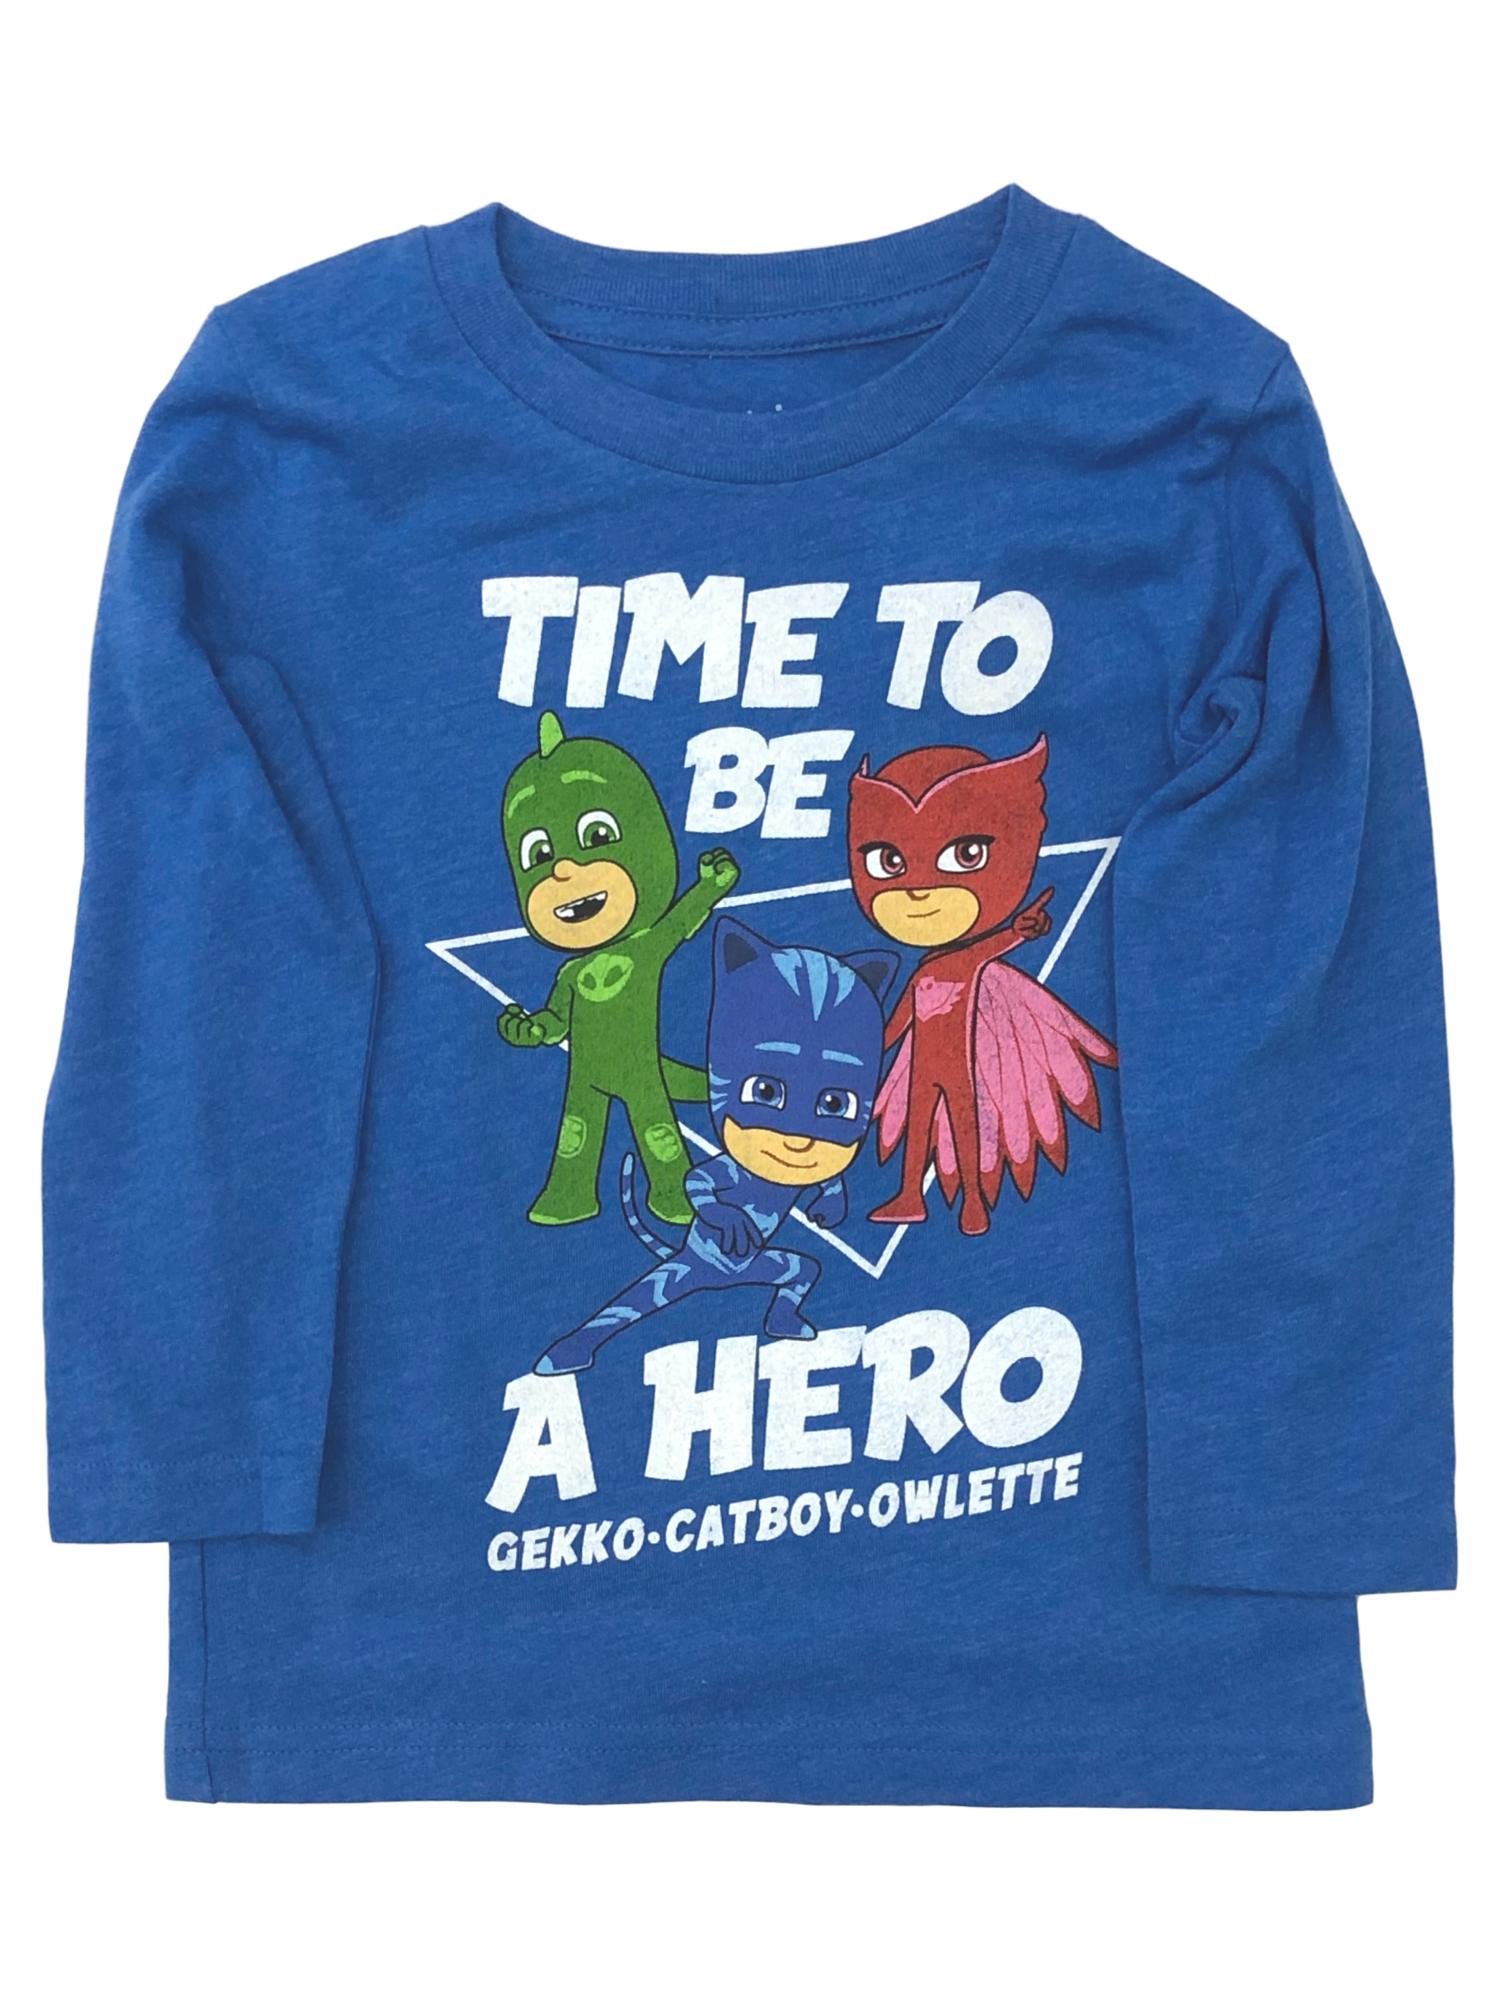 PJ Masks Toddler Boys Blue Long Sleeve Gekko Catboy Hero T-Shirt Tee Shirt 2T